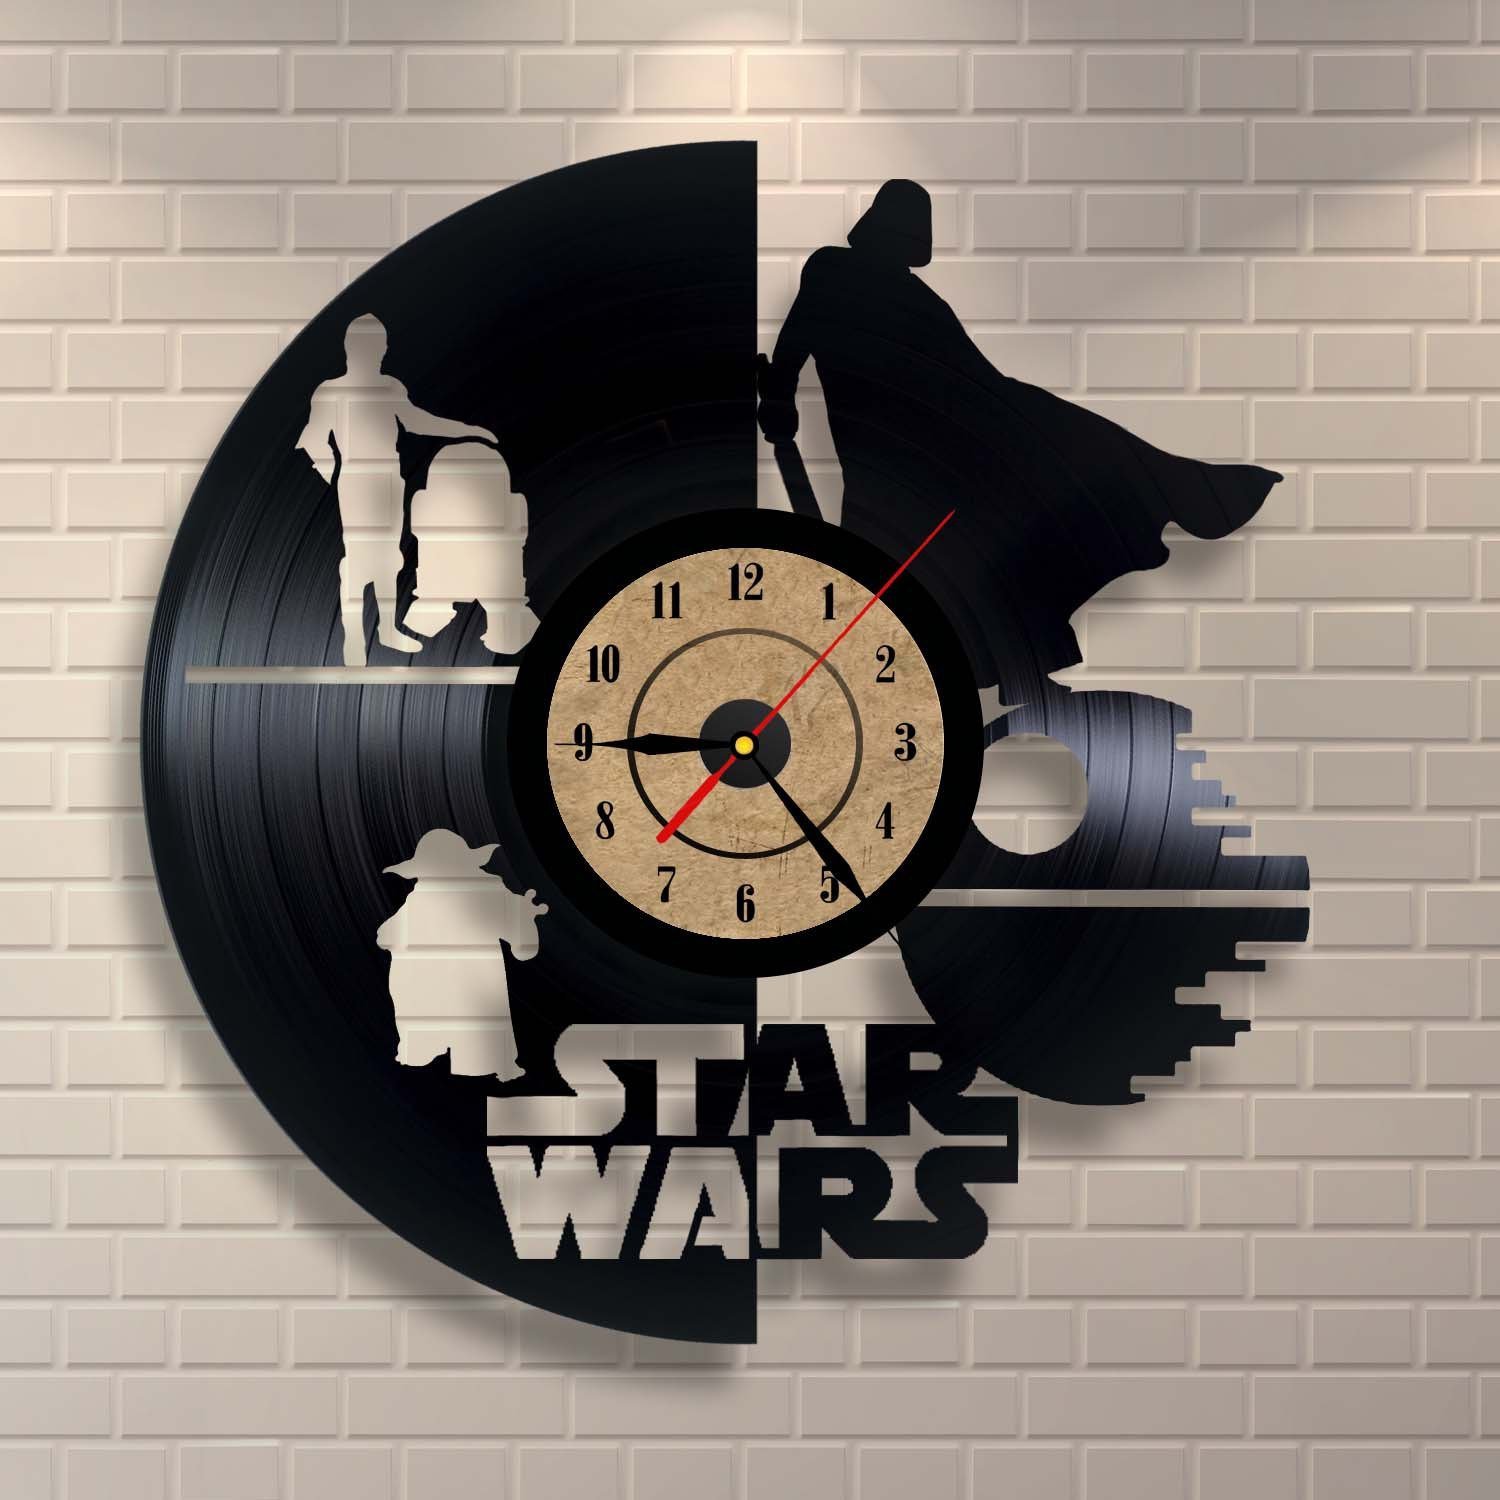 Vinyl Record Clock Star Wars Wall Decor Free Vector cdr Download - 3axis.co